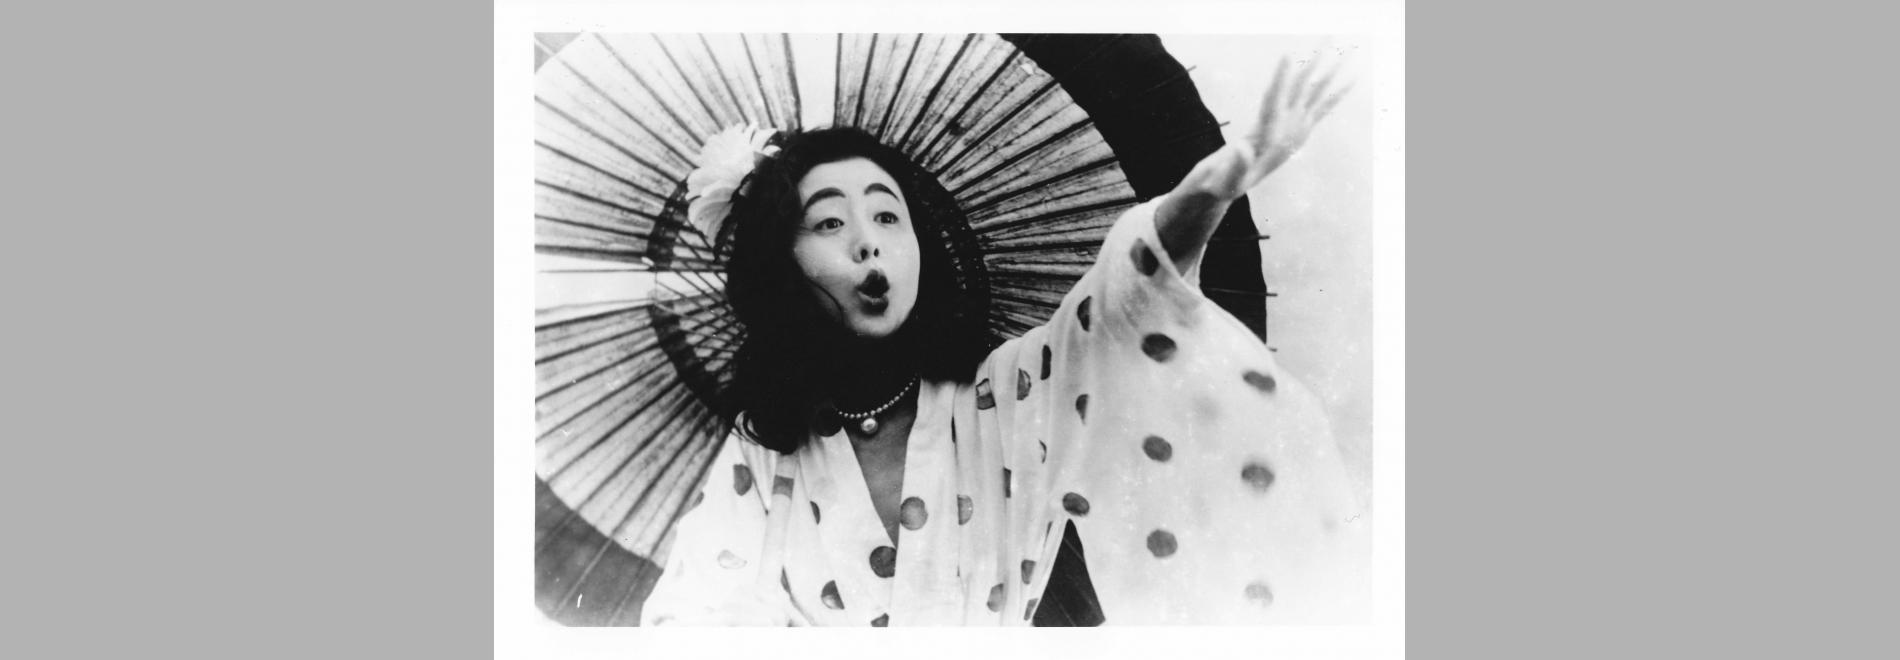 Dobu / La cuneta (Kaneto Shindô, 1953)